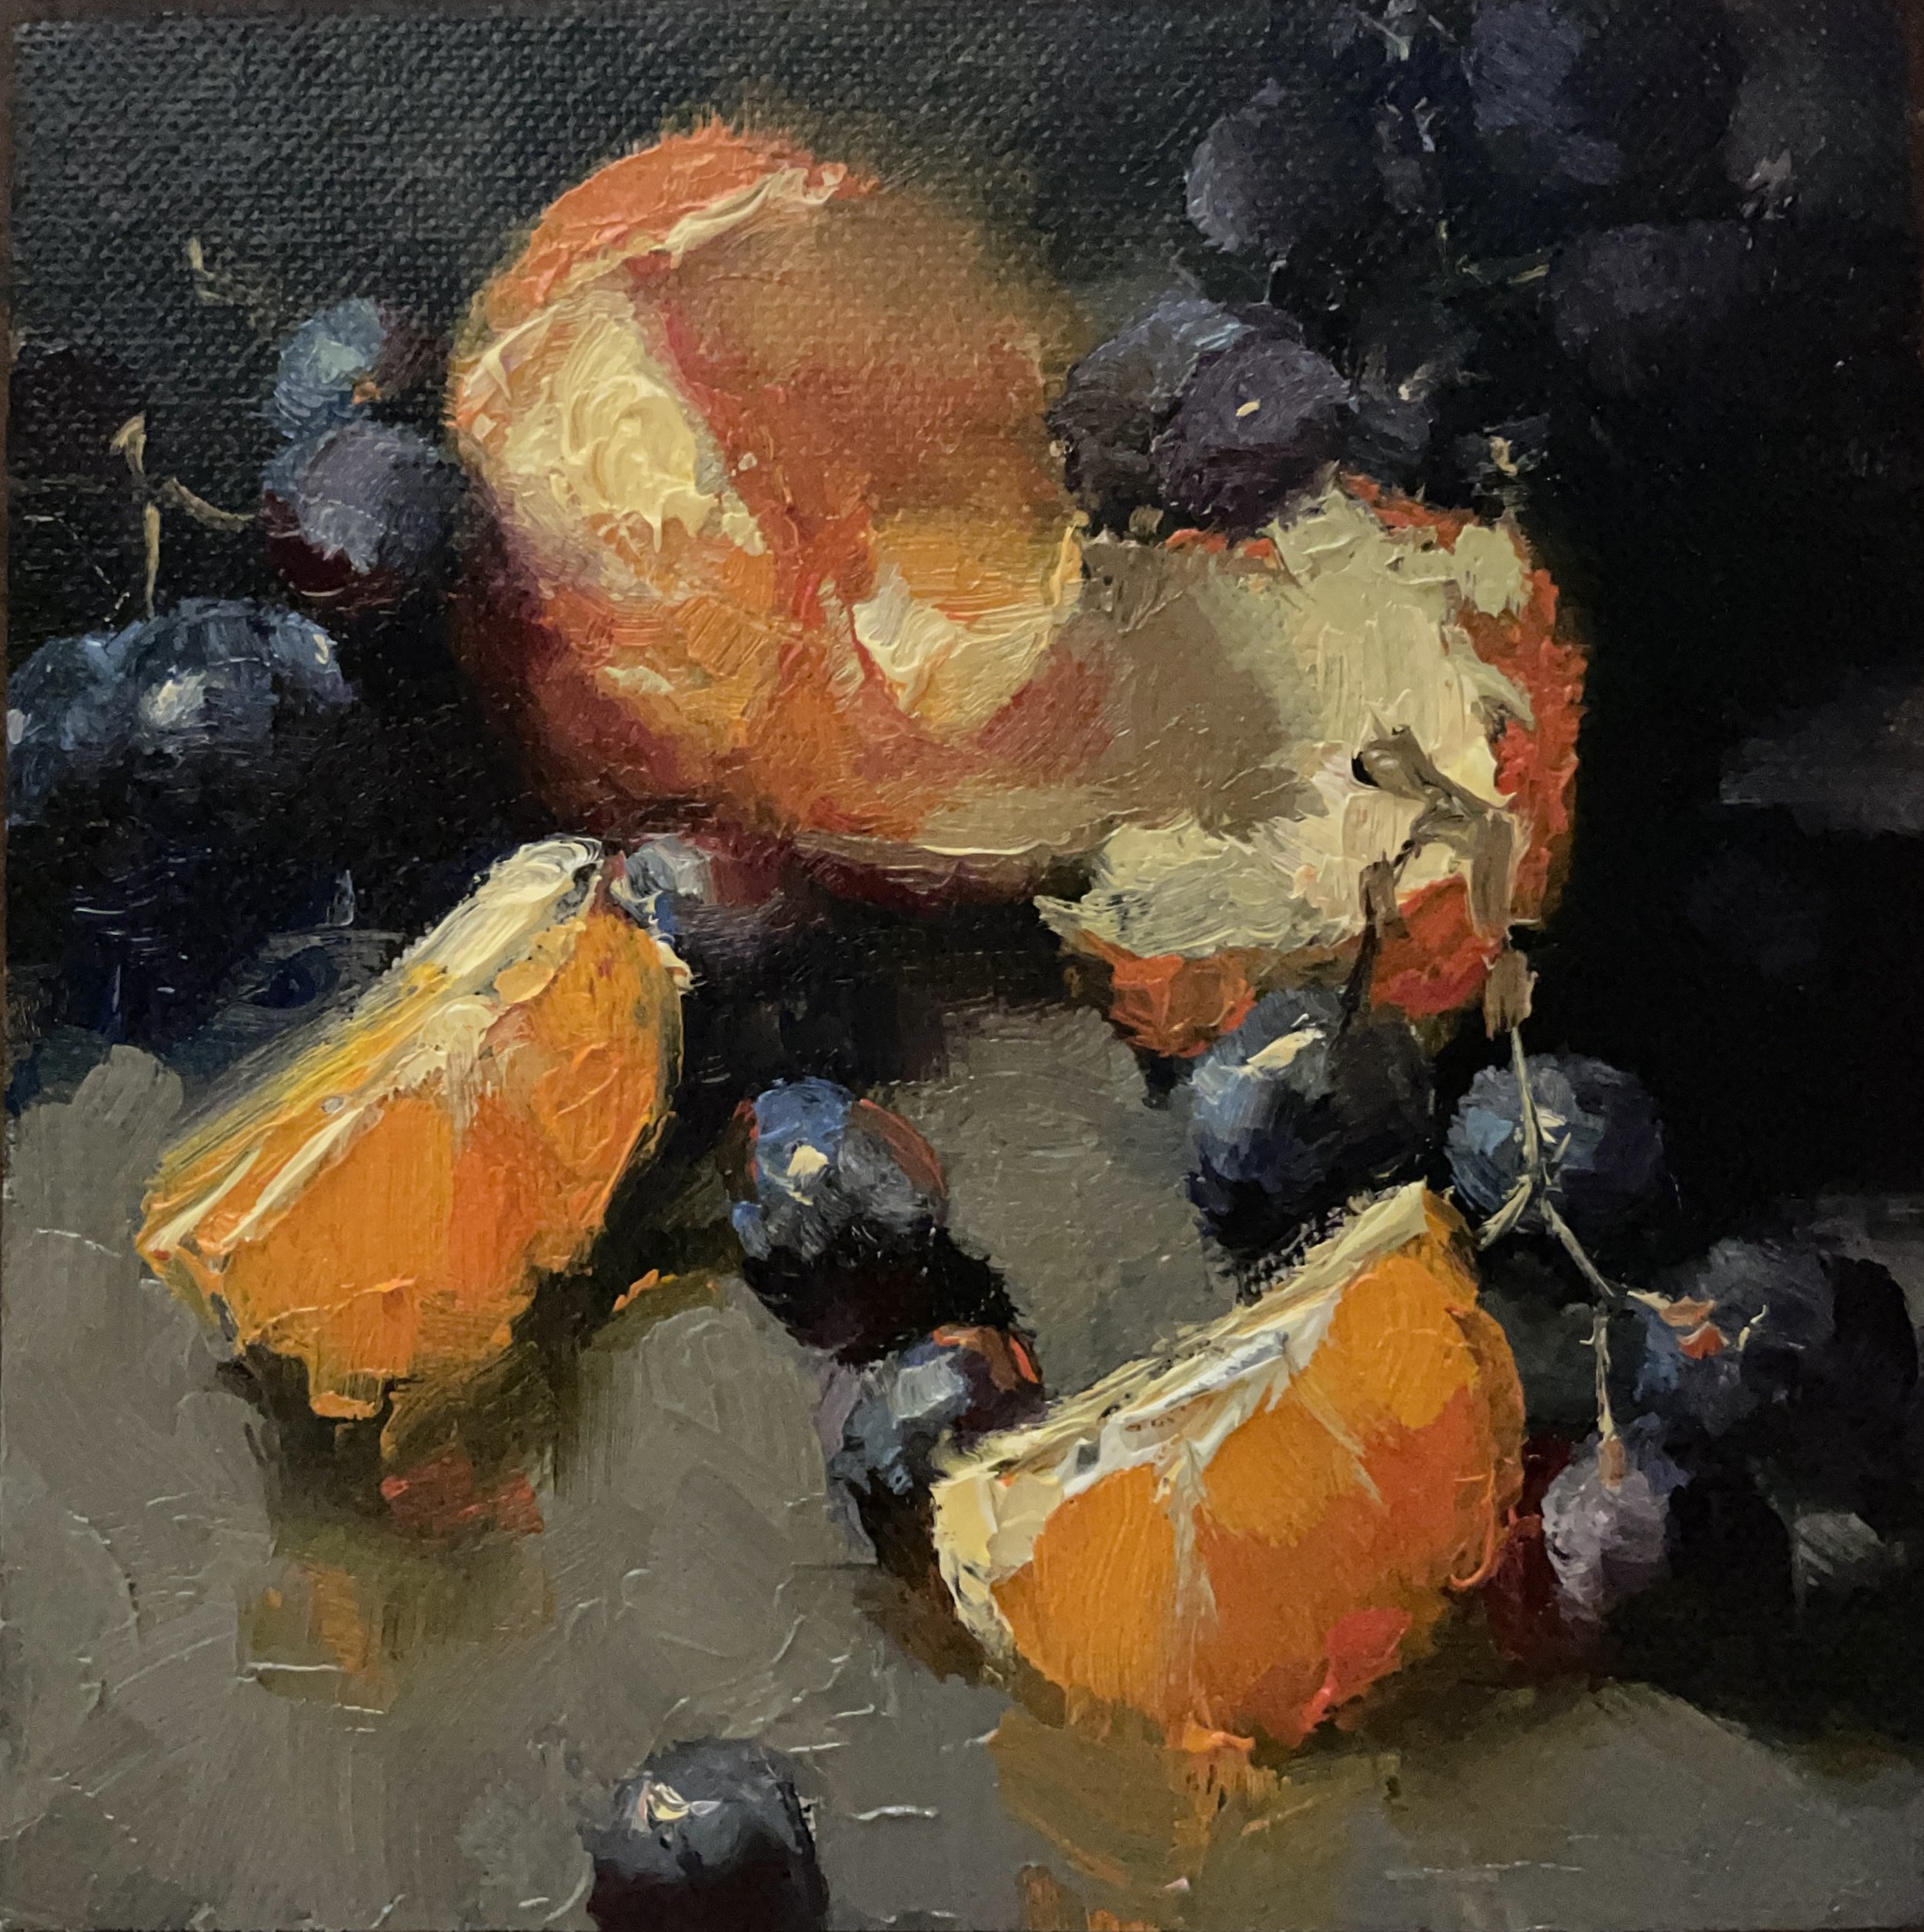 Tangerine Slices by Carol Tarzier